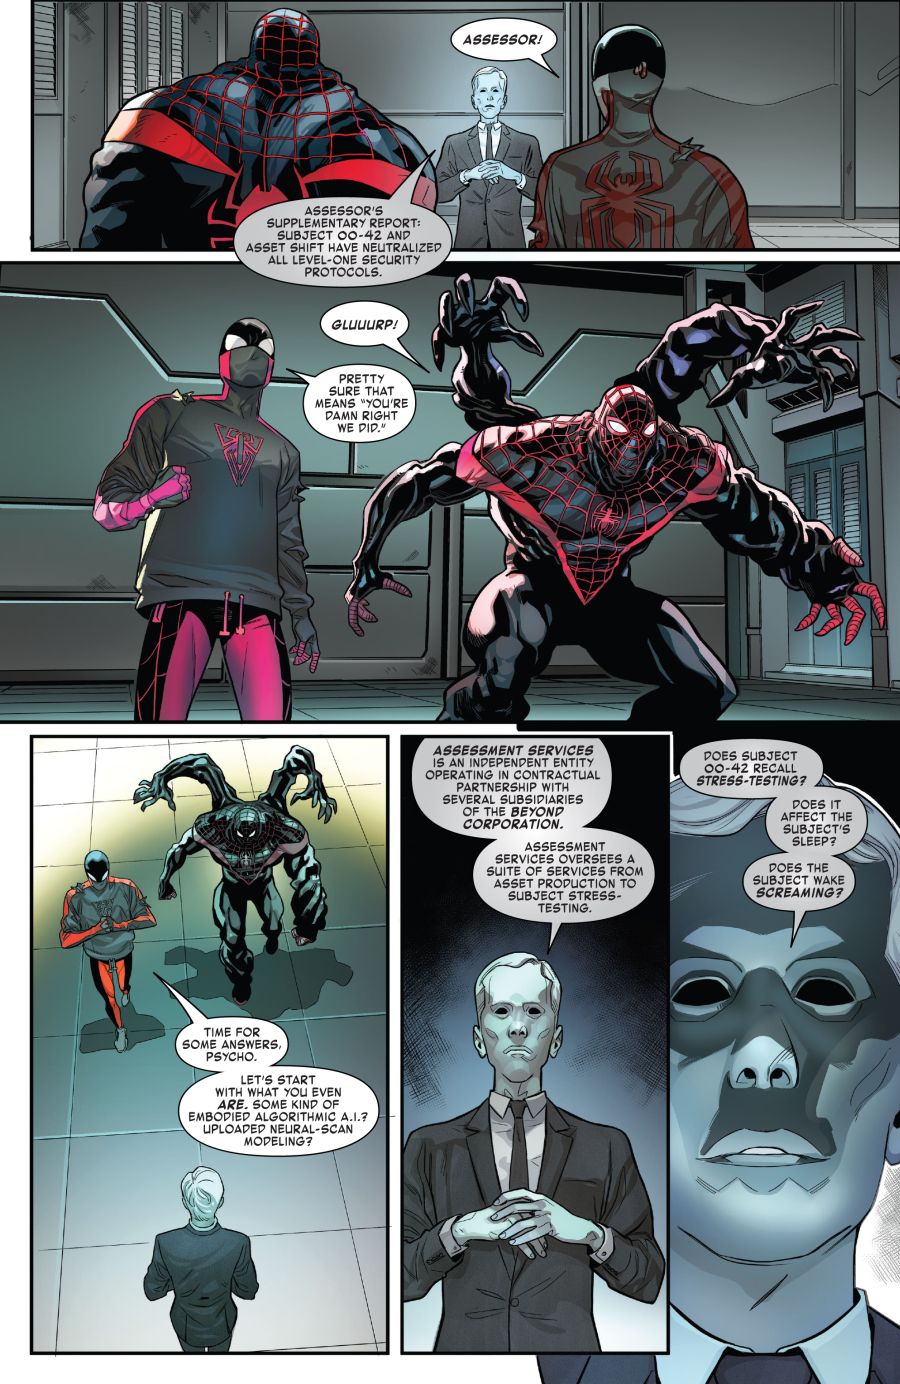 Miles Morales: Spider-Man #35